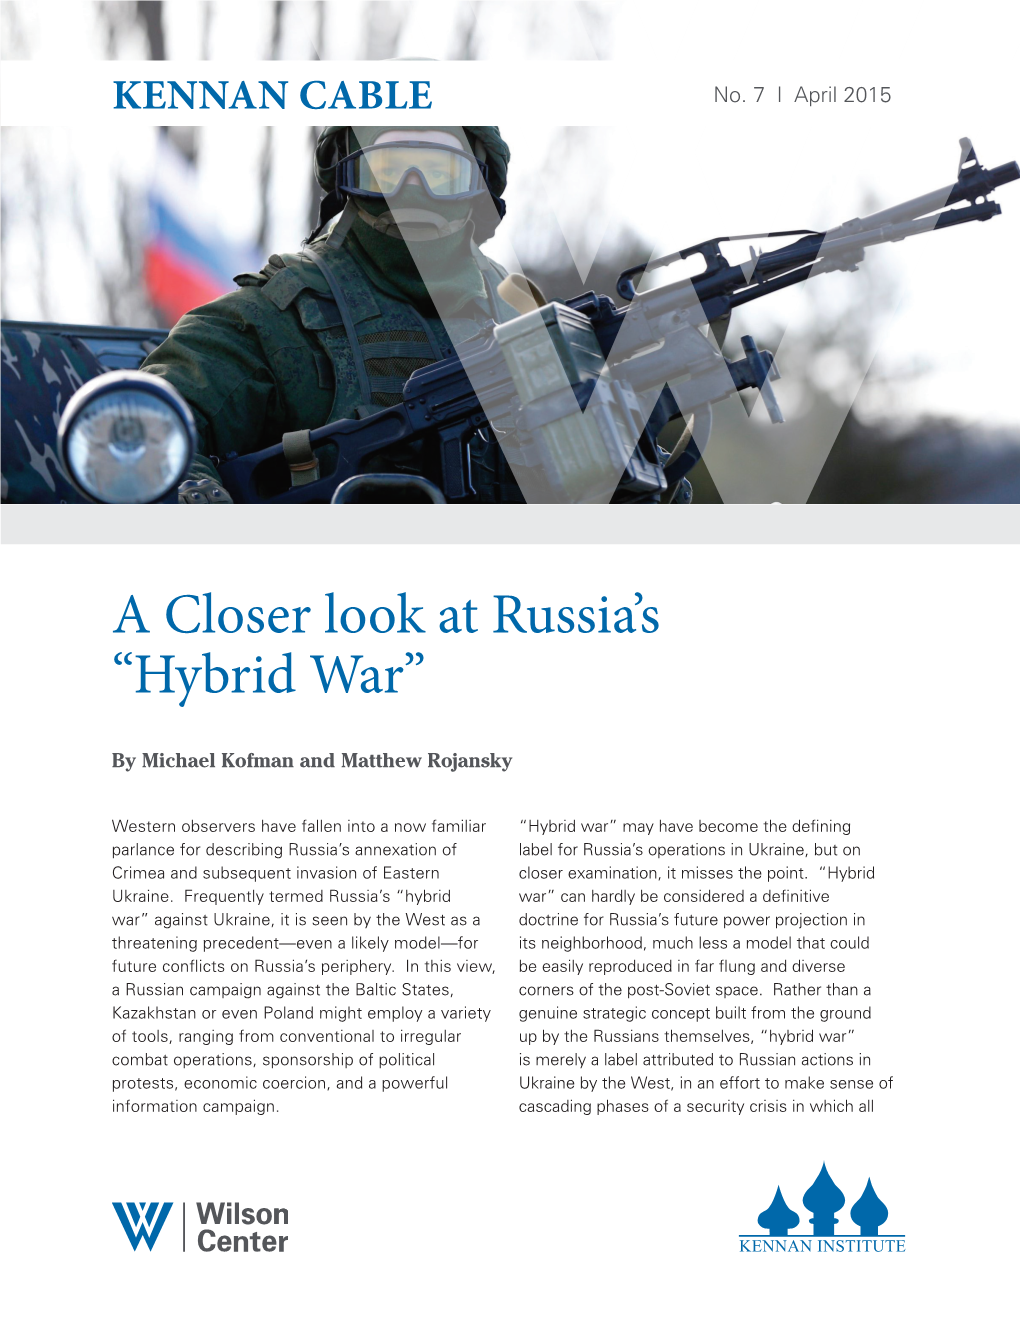 A Closer Look at Russia's "Hybrid War"